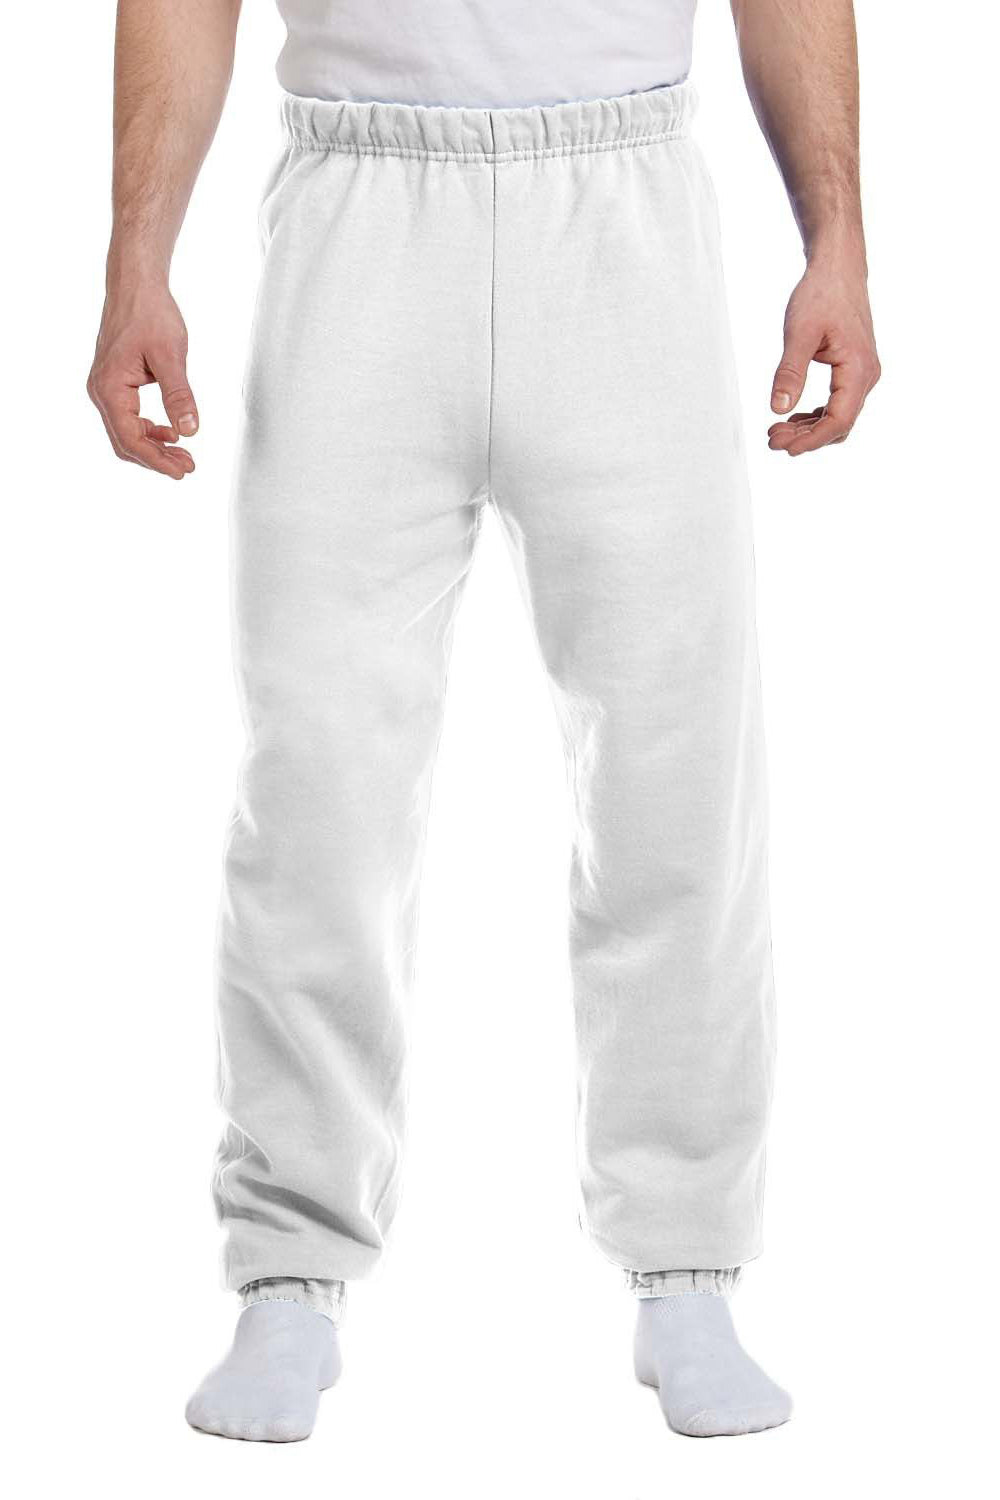 Jerzees 973 Mens NuBlend Fleece Sweatpants White Front